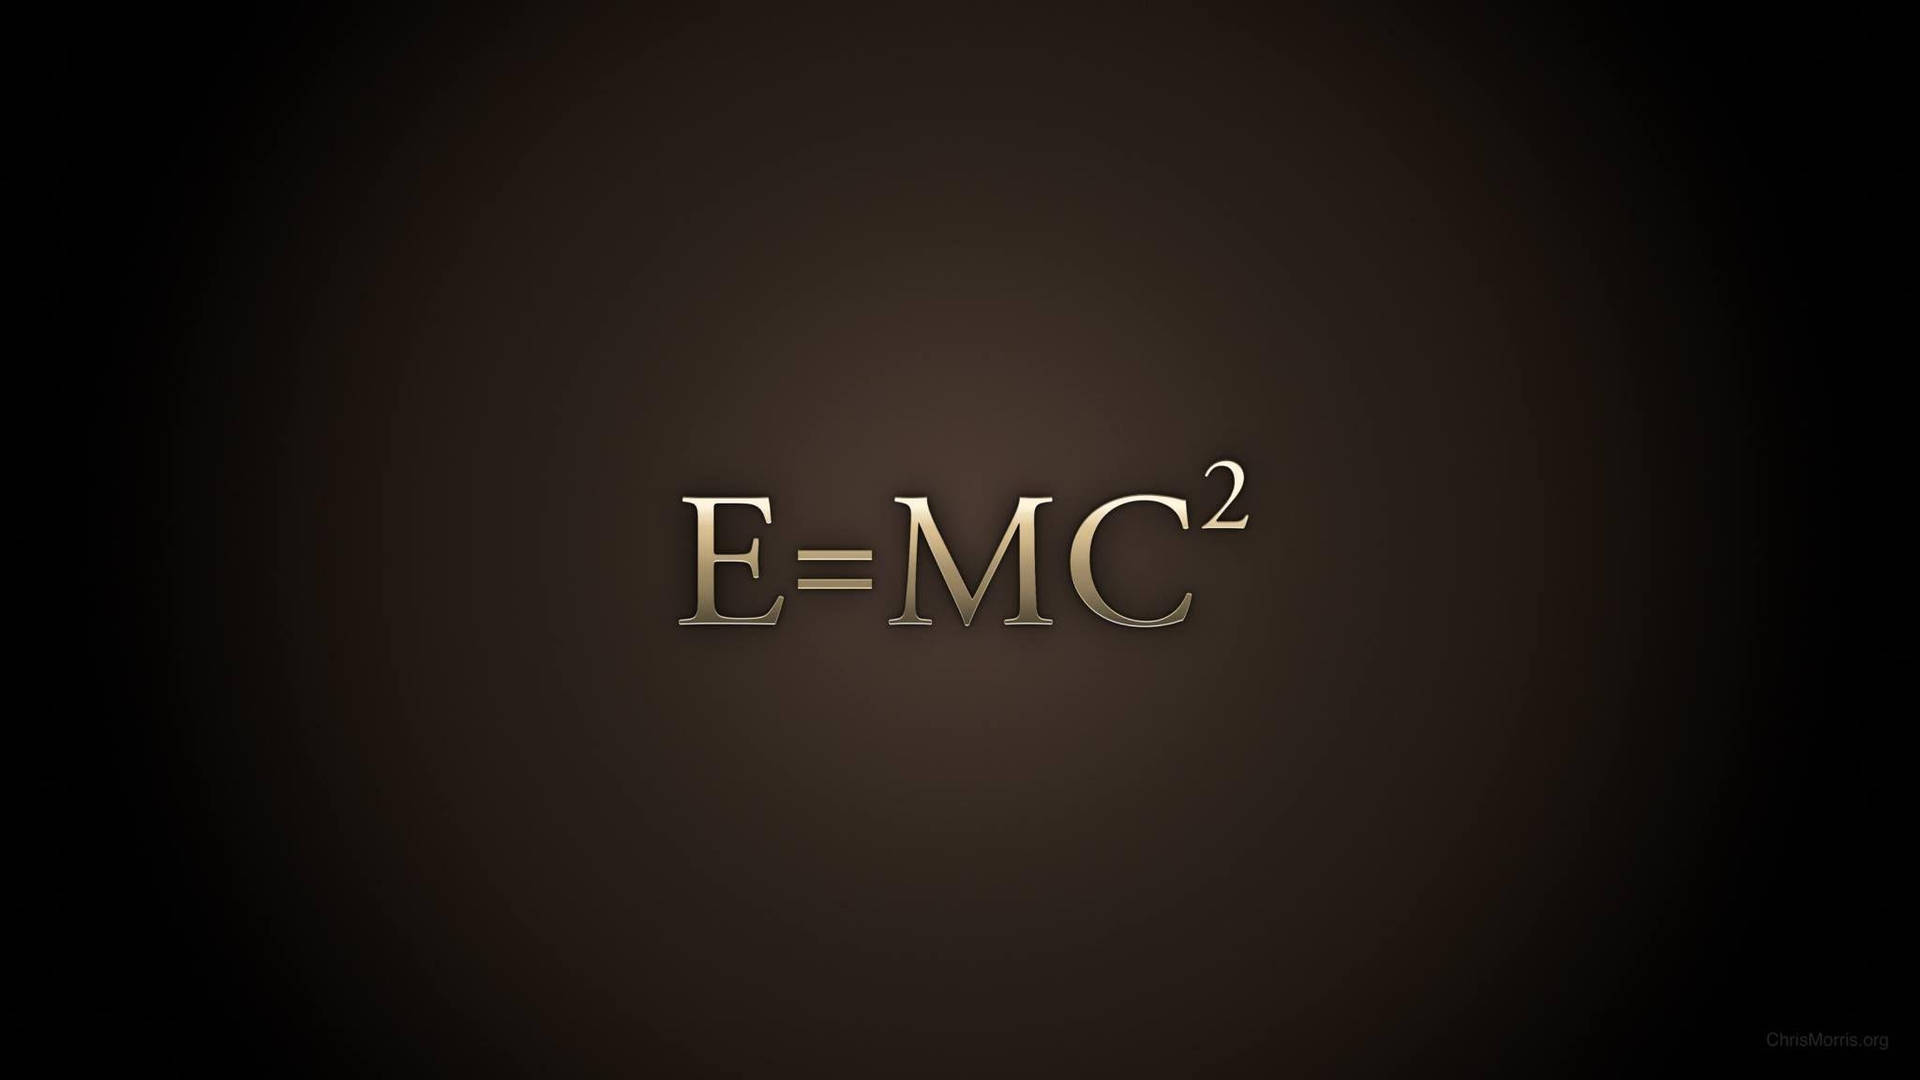 Insightful Einstein Physics Equation On A Golden Background